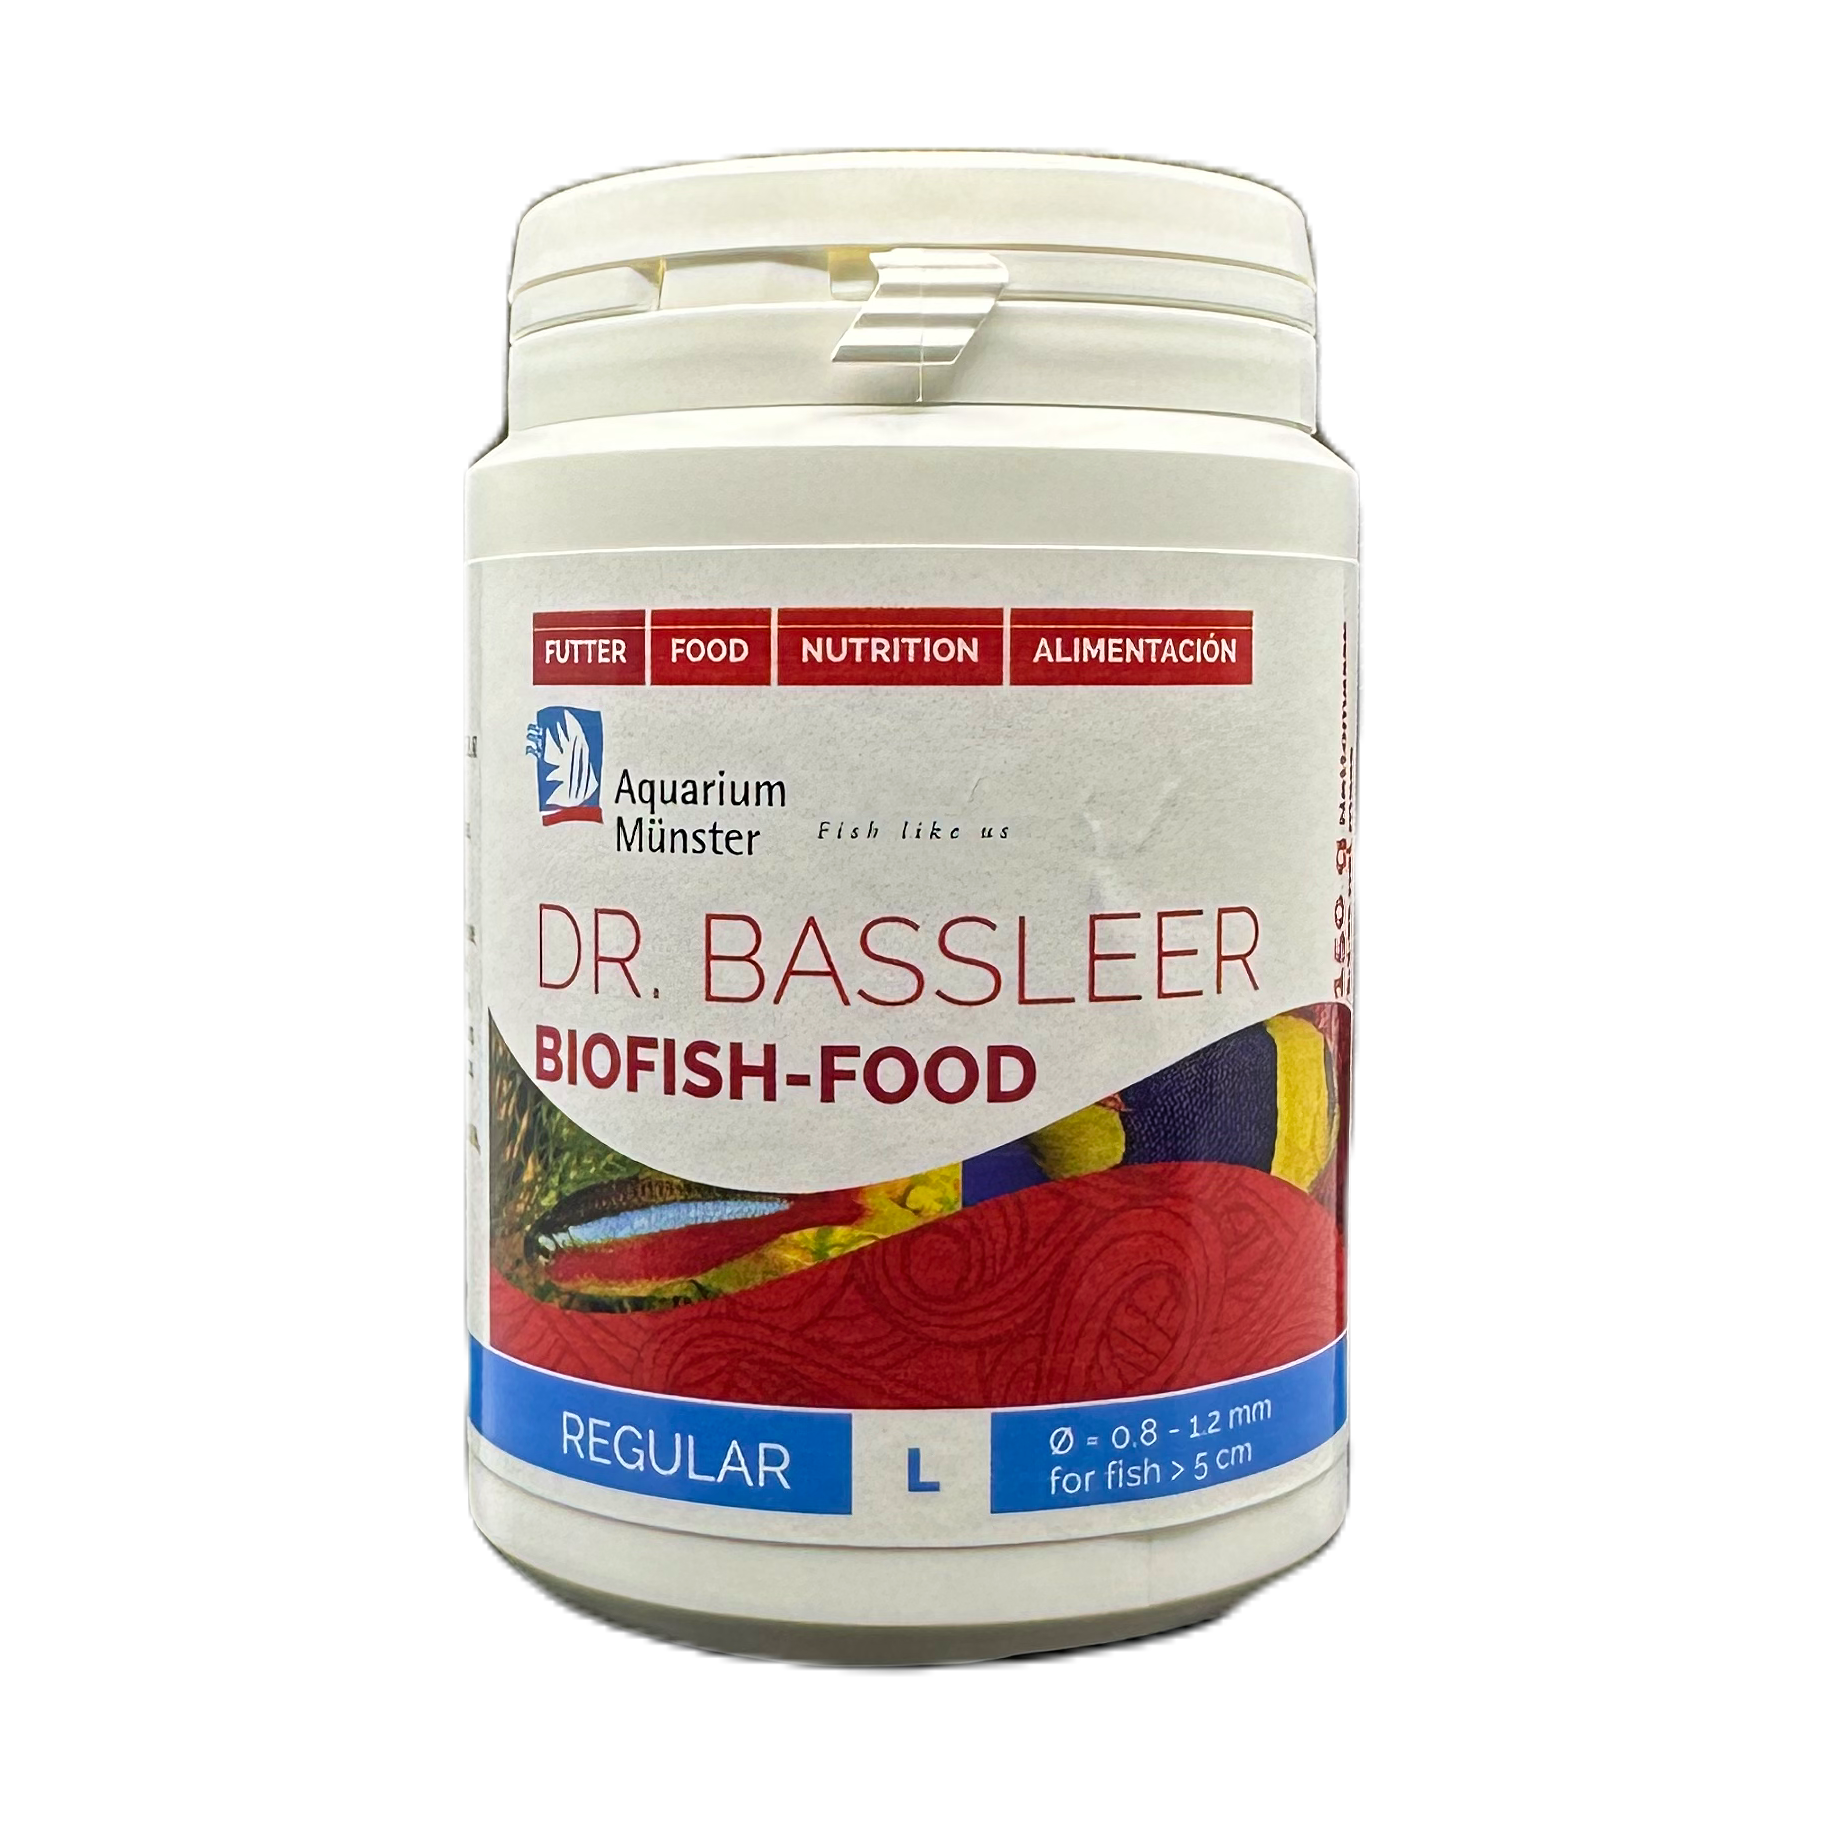 Dr. Bassleer BioFish Food REGULAR Lrg - 150g 4005258003564 Super Cichlids